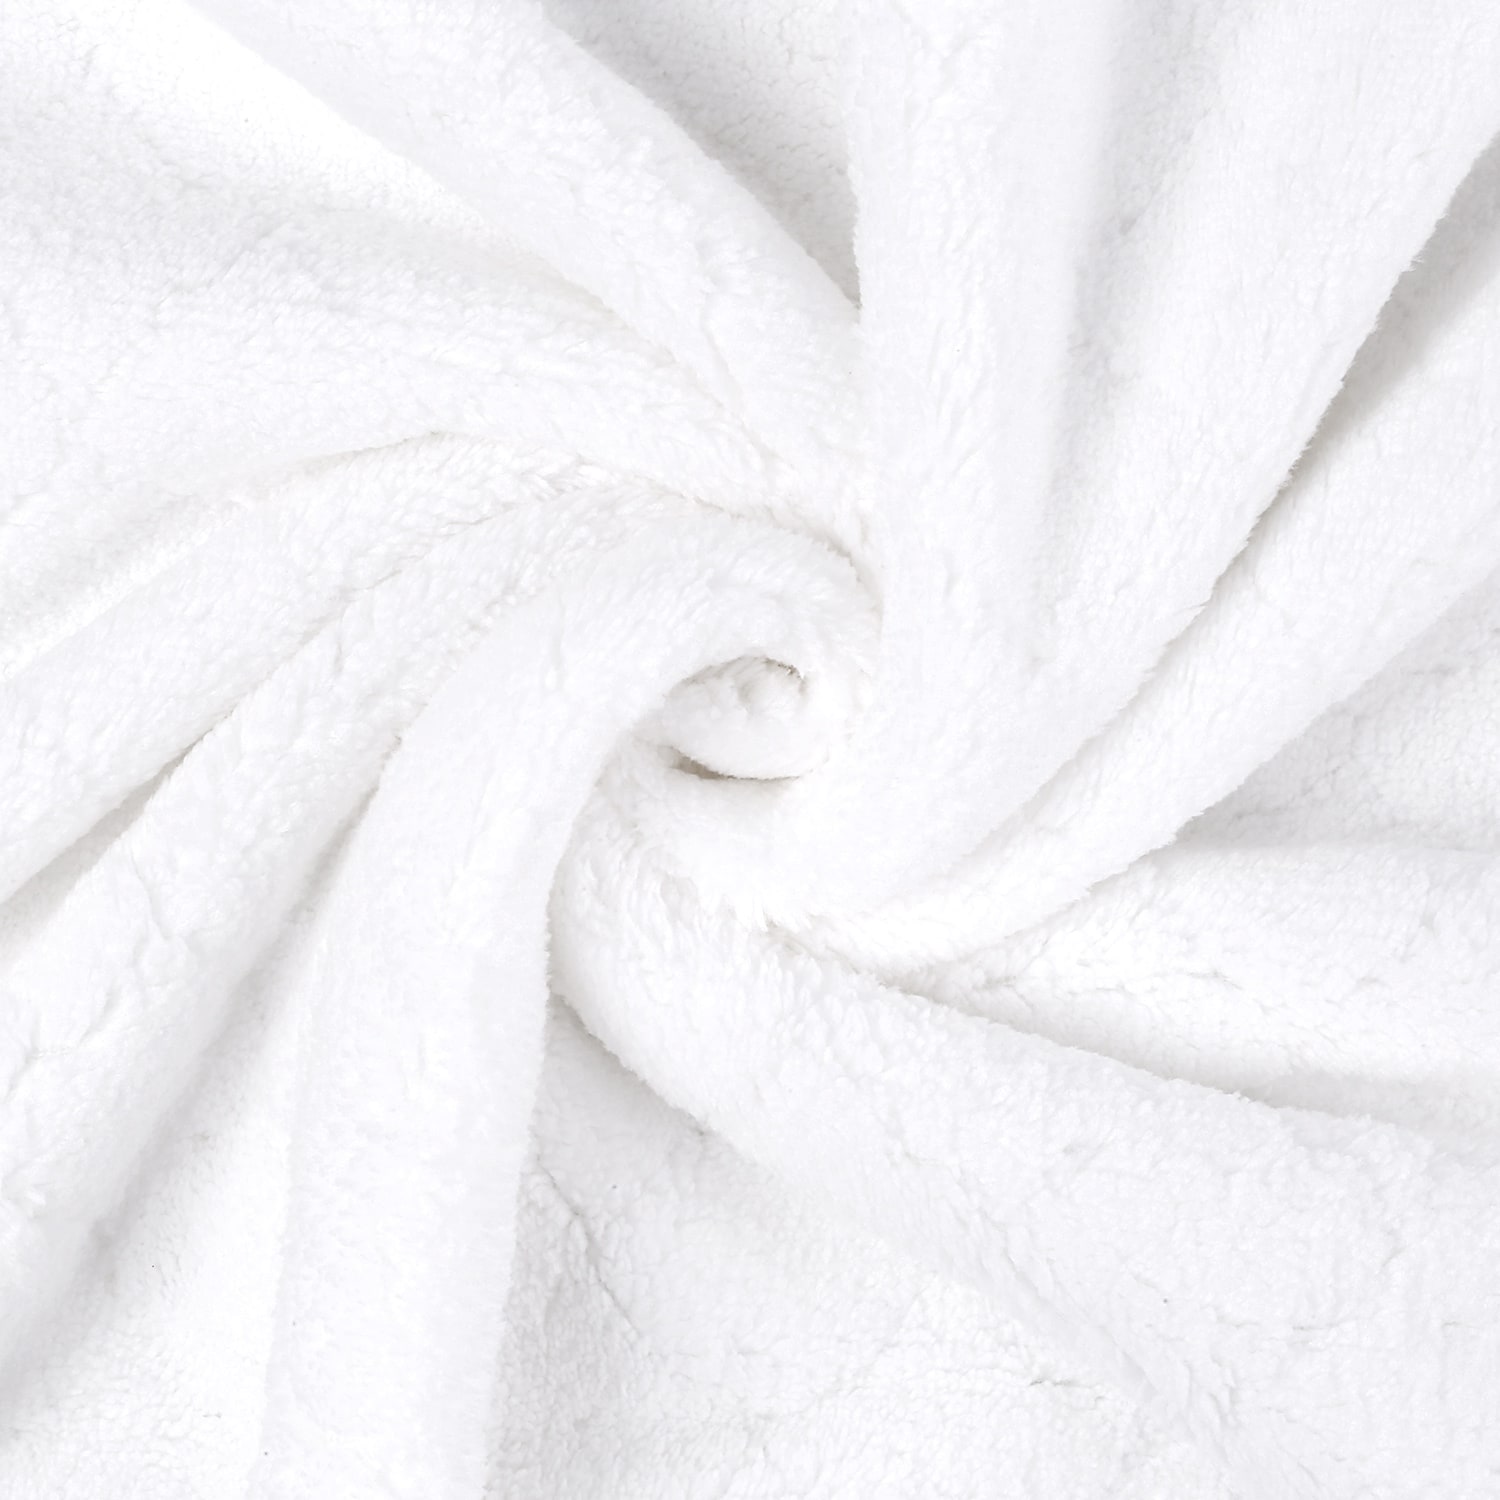 Economy Coral Fleece White Towel Set